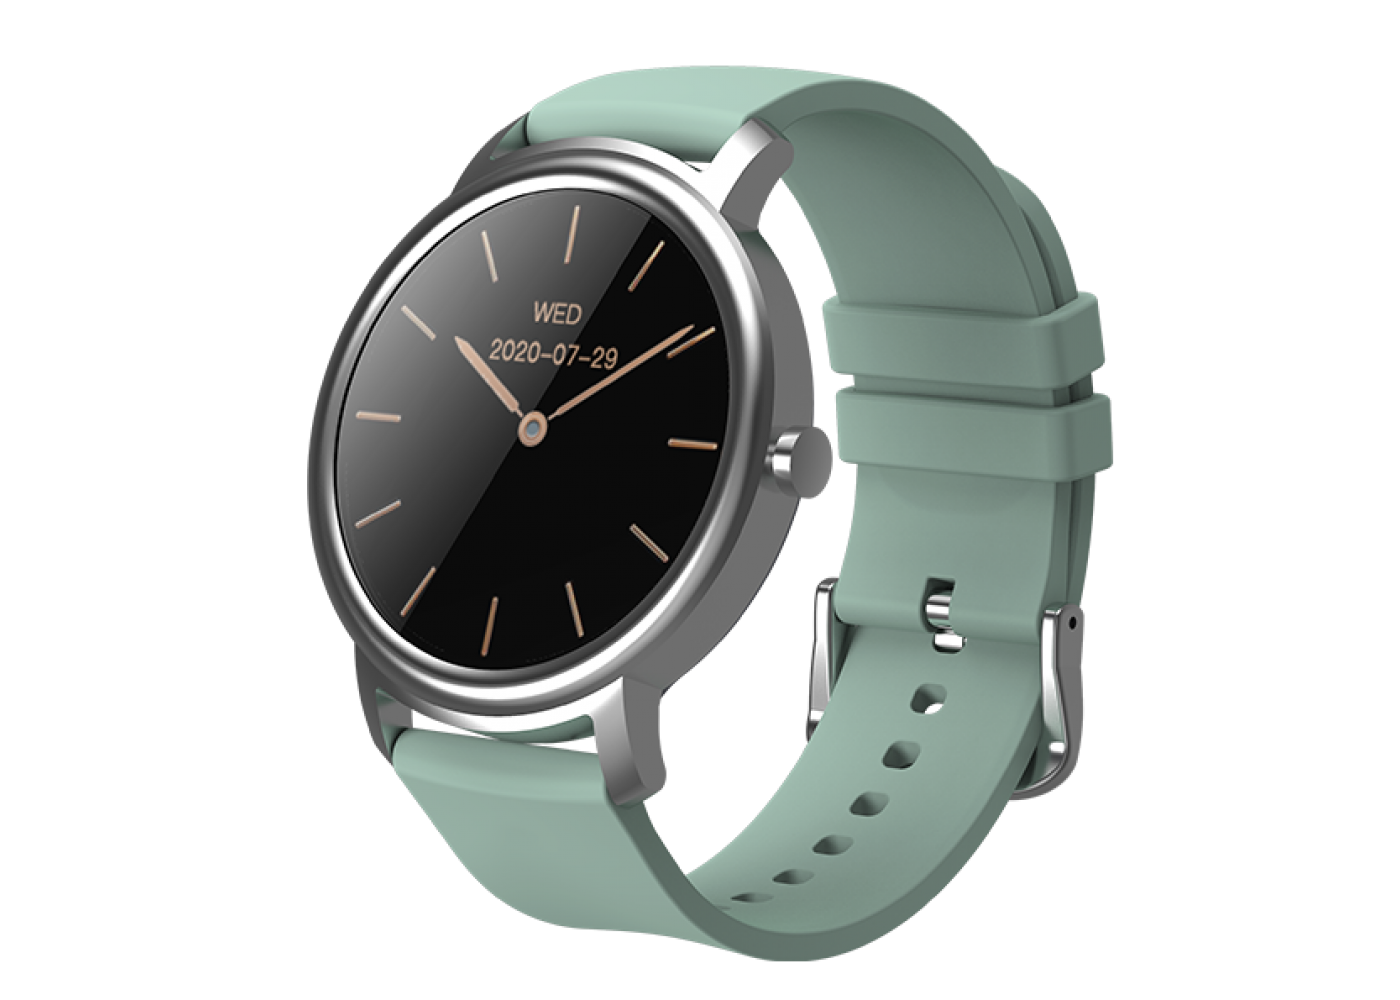 Часы Mibro Air Smart watch. Умные часы Xiaomi Mibro Air (xpaw001) eu. Xiaomi Mibro Air Smart watch Silver. Xiaomi Mibro Air xpaw001 Black.